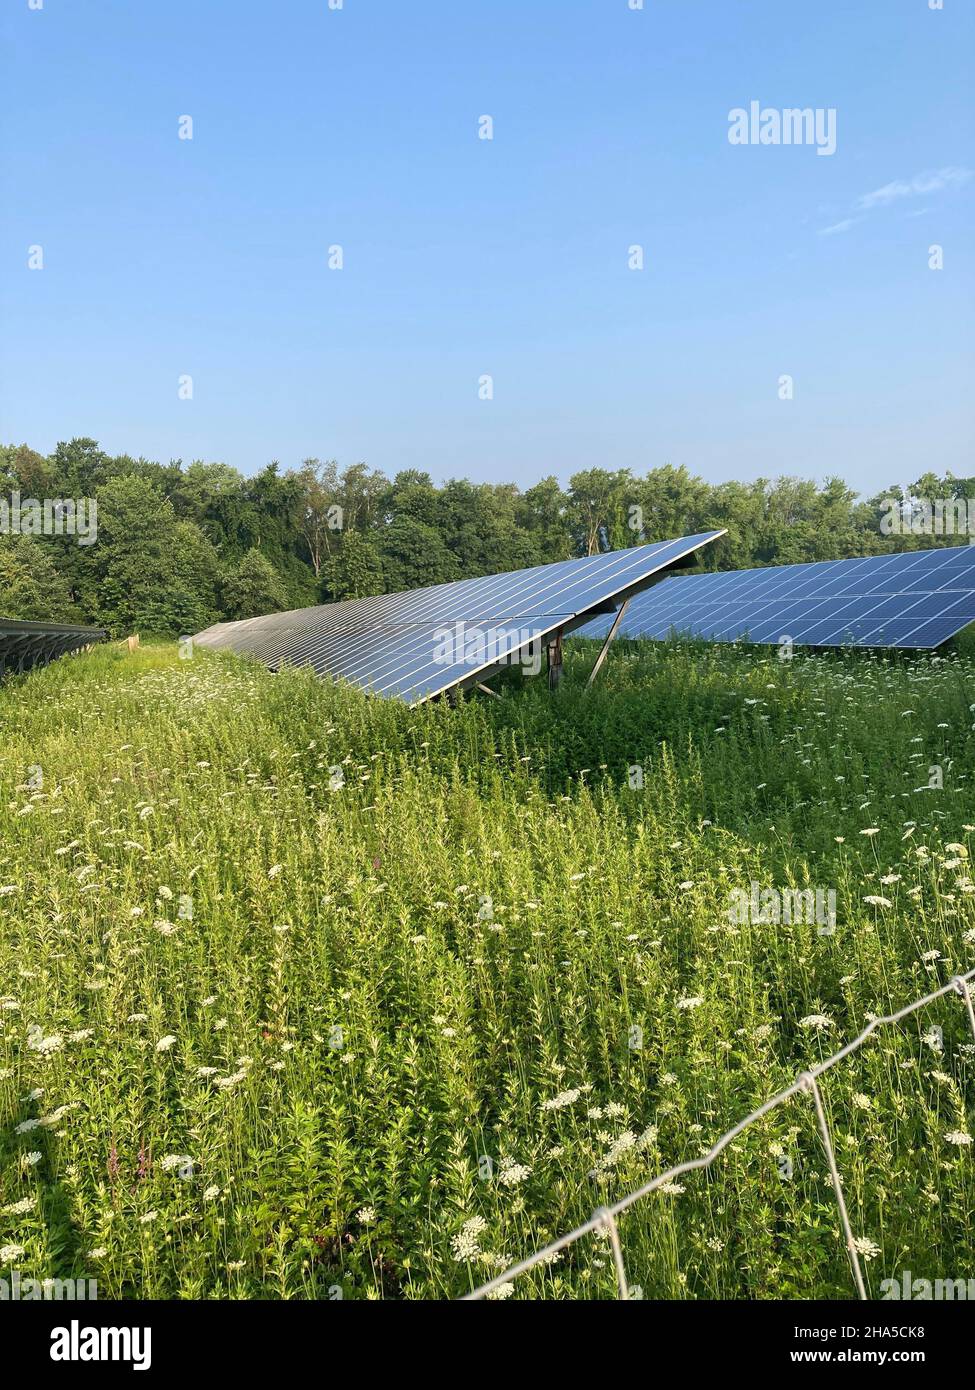 Sonnenkollektoren, die Strom erzeugen, kingston, ny Staat, usa Stockfoto